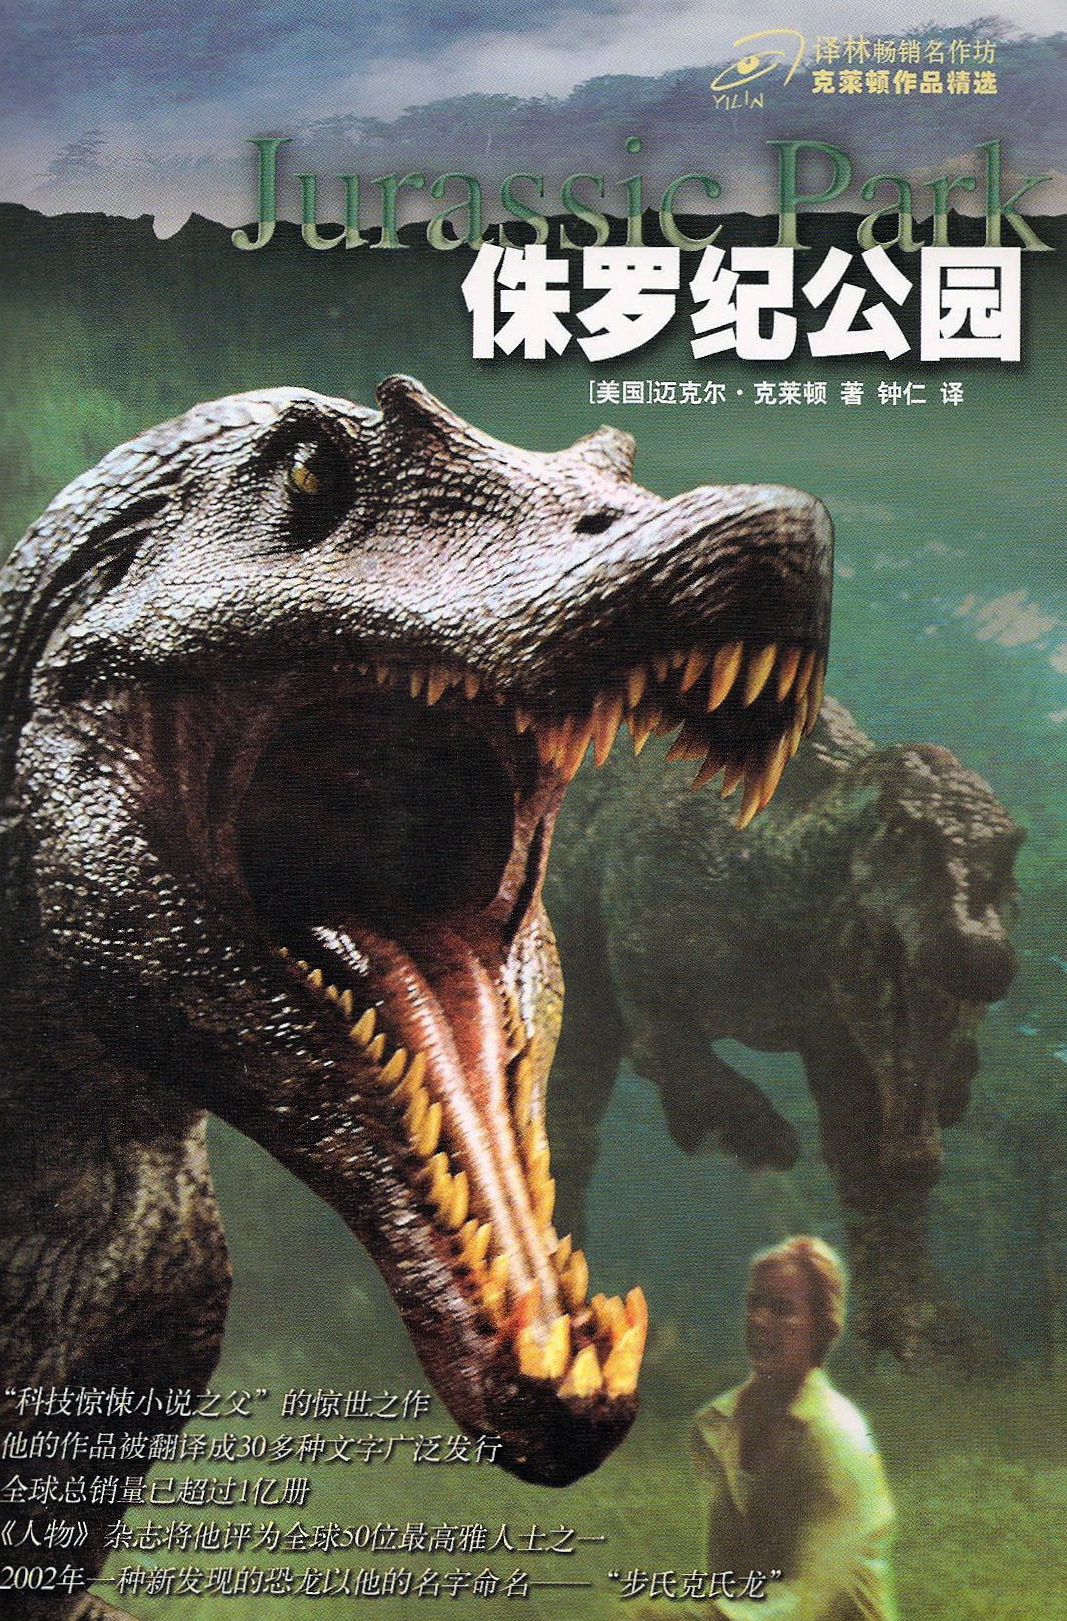 Jurassic Park
China – 2004